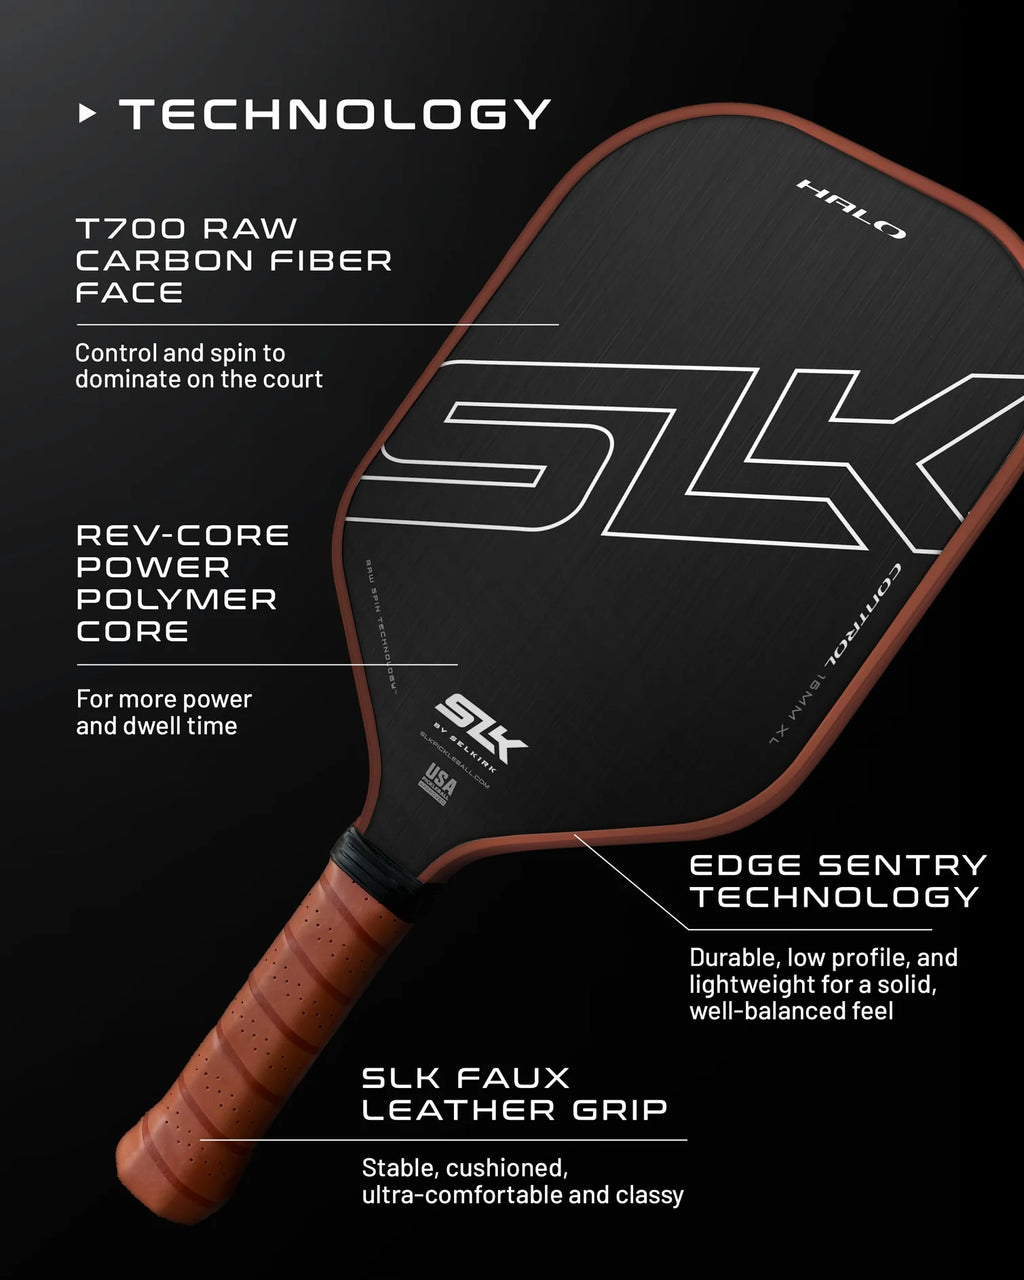 SLK Halo Control XL Parris Todd Signature Paddle